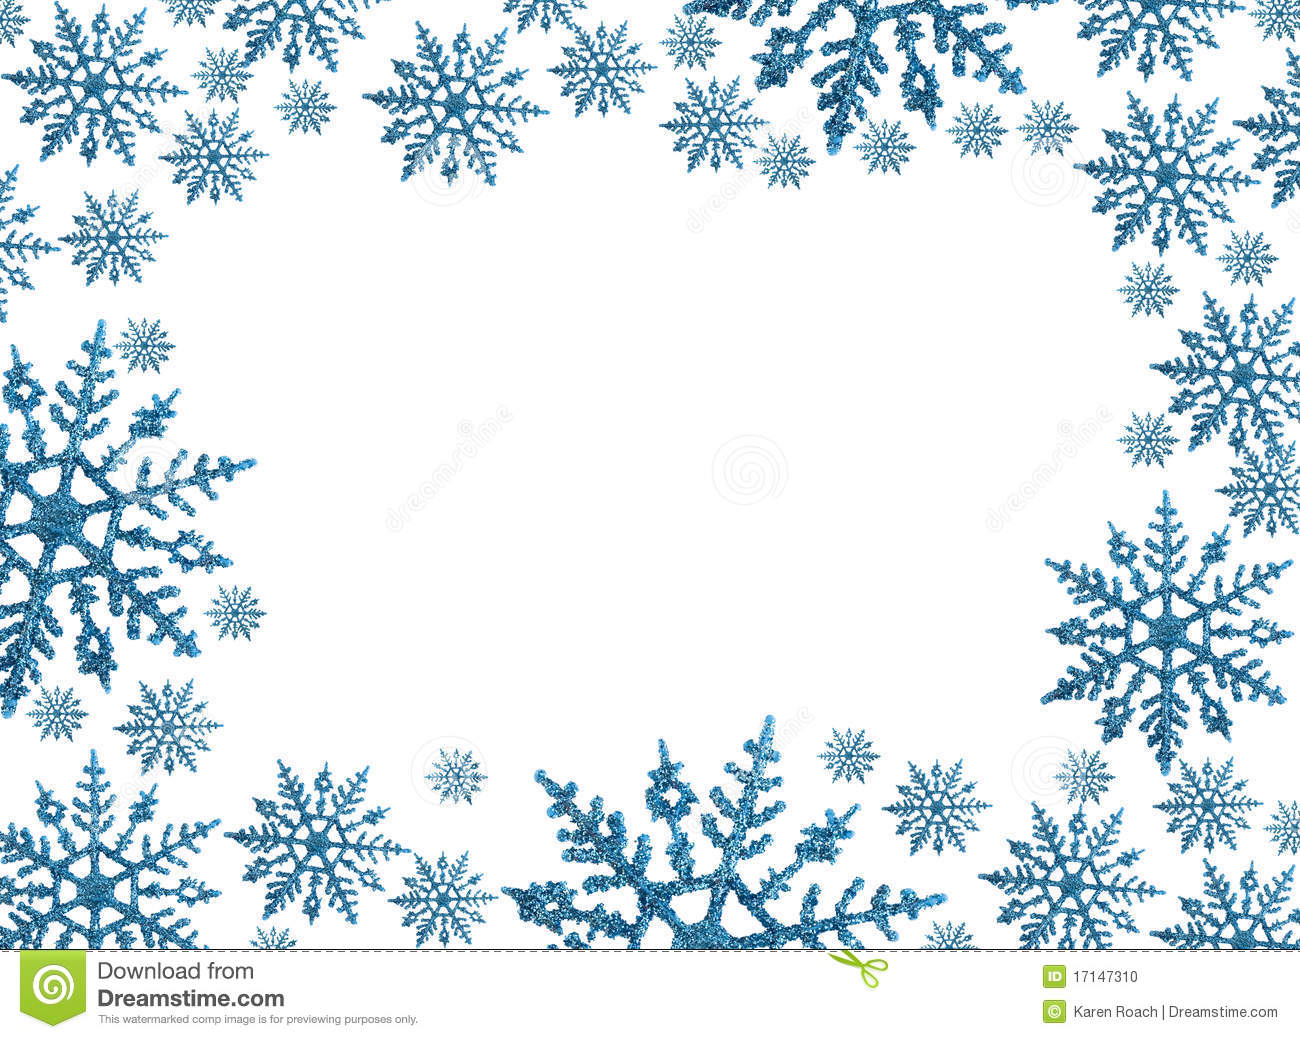 Holiday Snowflake Border Clipart Free.